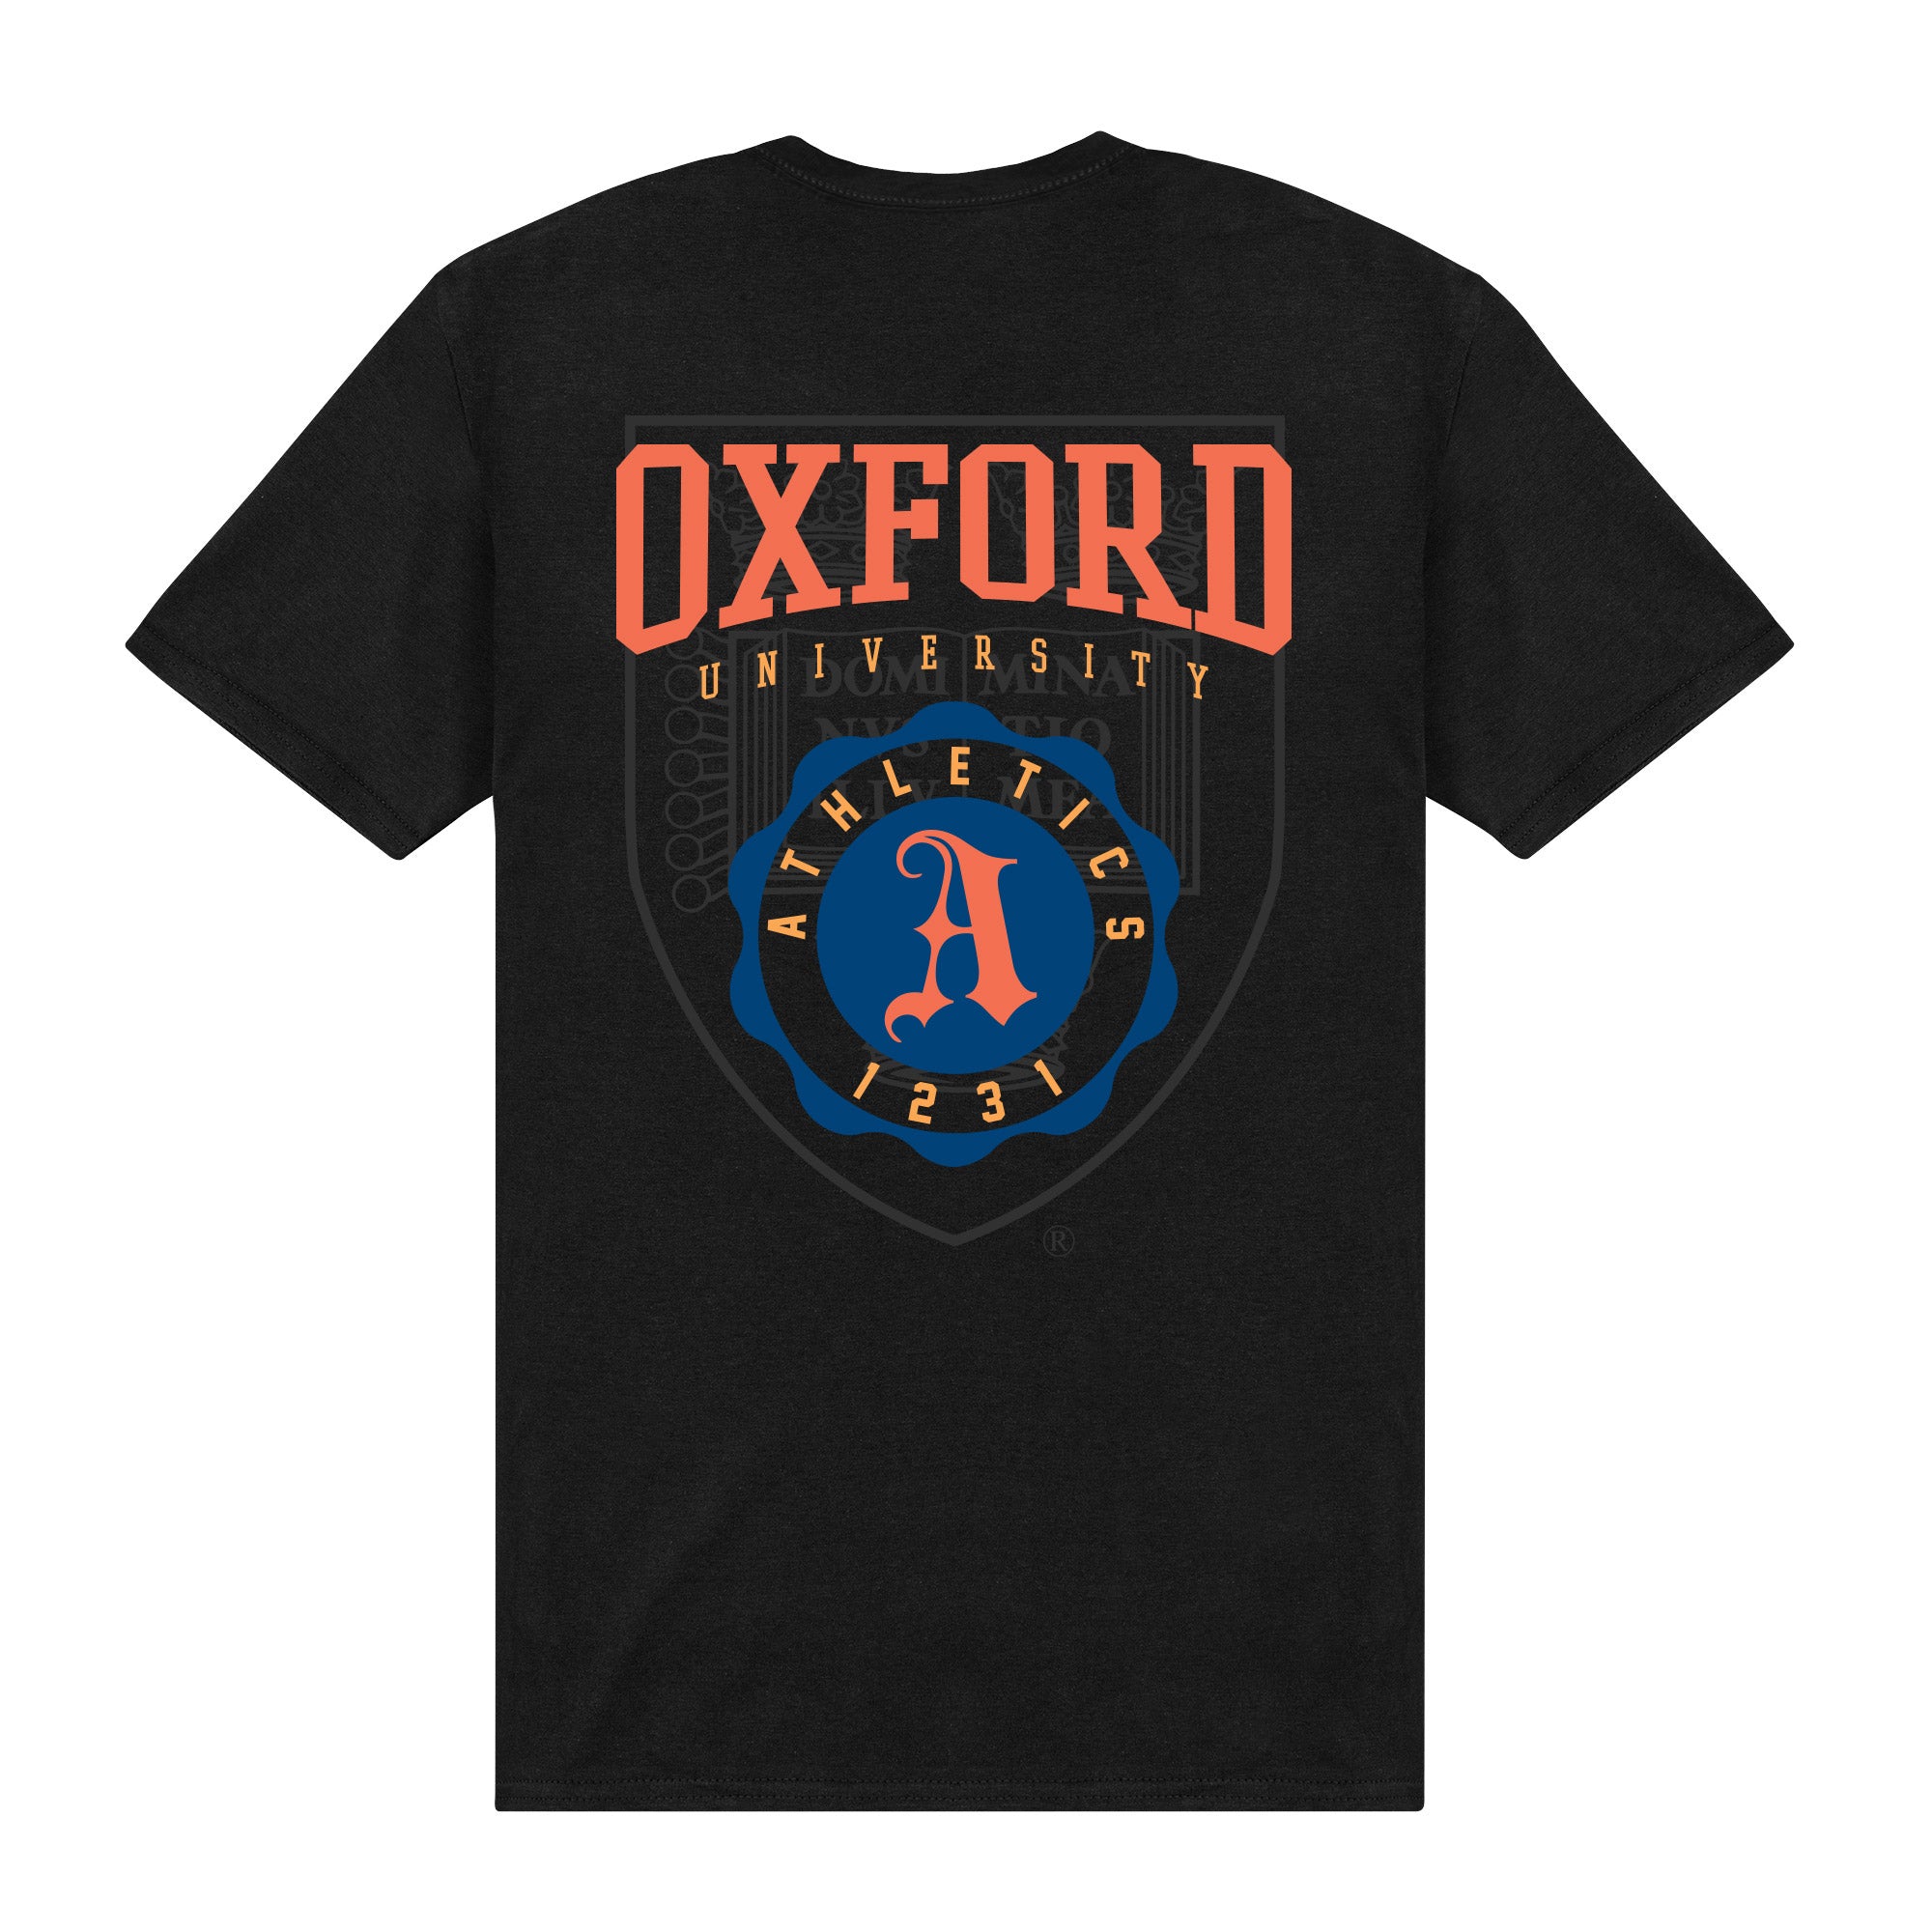 Oxford University Athletics T-Shirt - Black